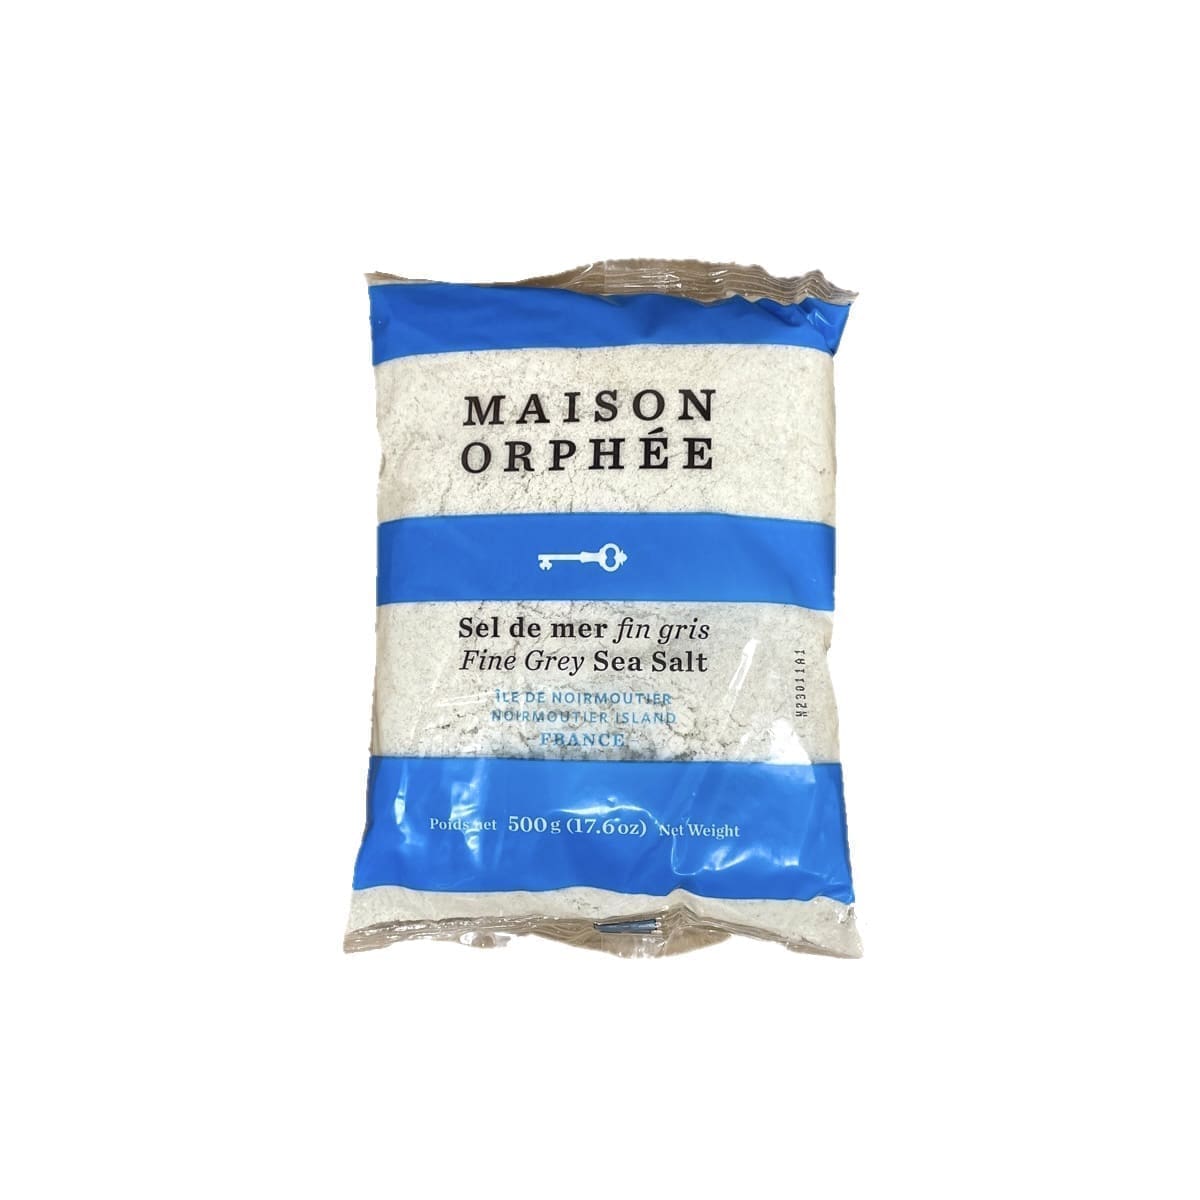 Maison Orphee Fine Grey Sea Salt (2 x 500g)